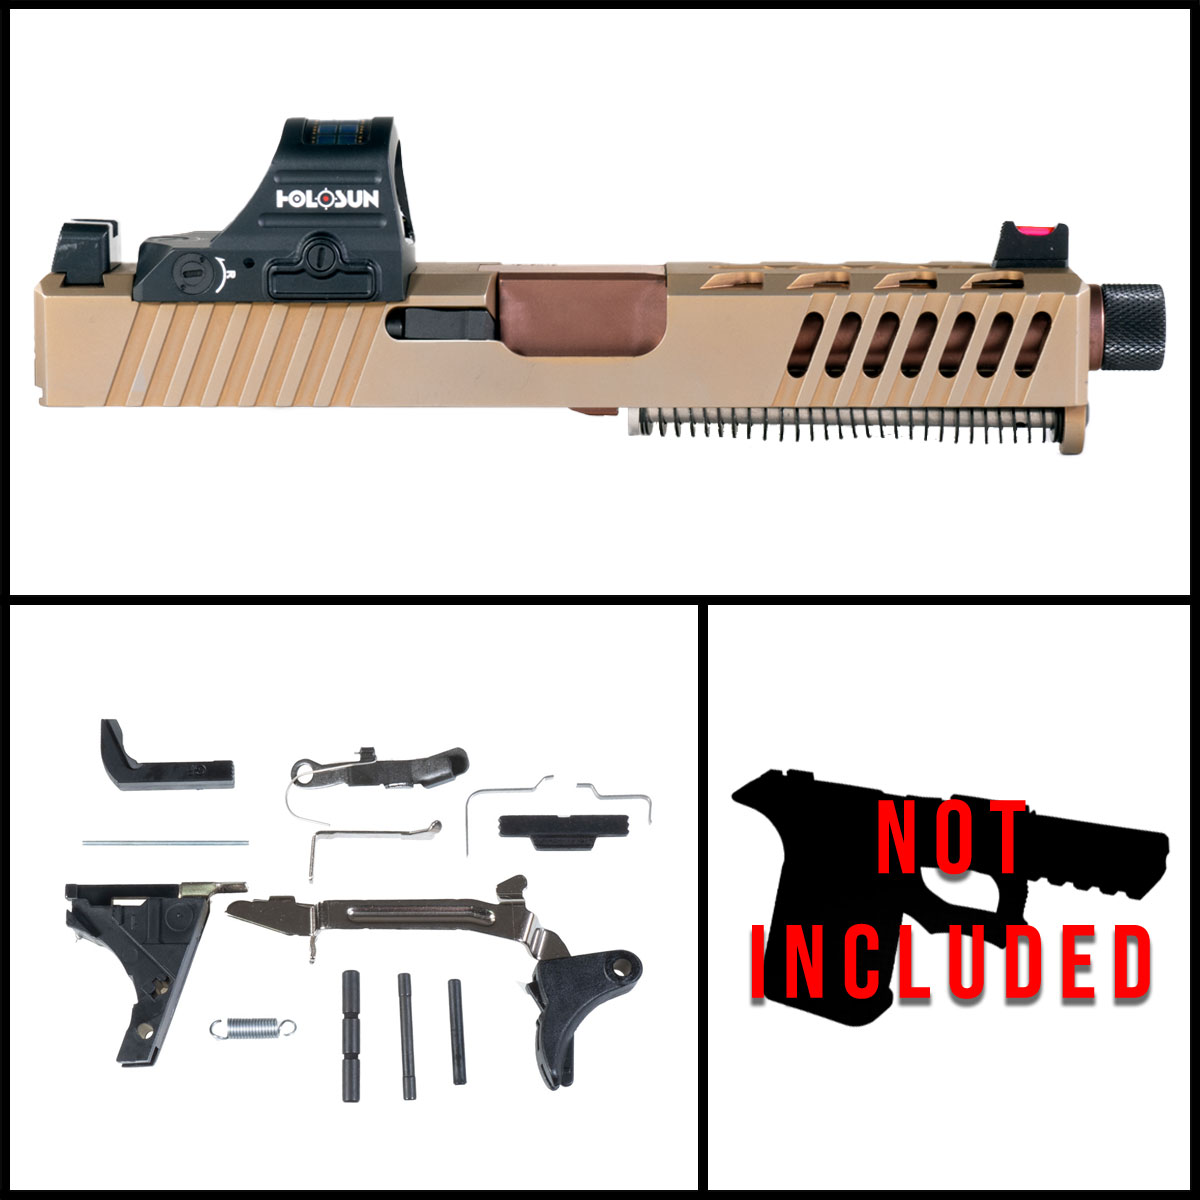 OTD 'Cyprus' 9mm Full Pistol Build Kit (Everything Minus Frame) - Glock 19 Compatible